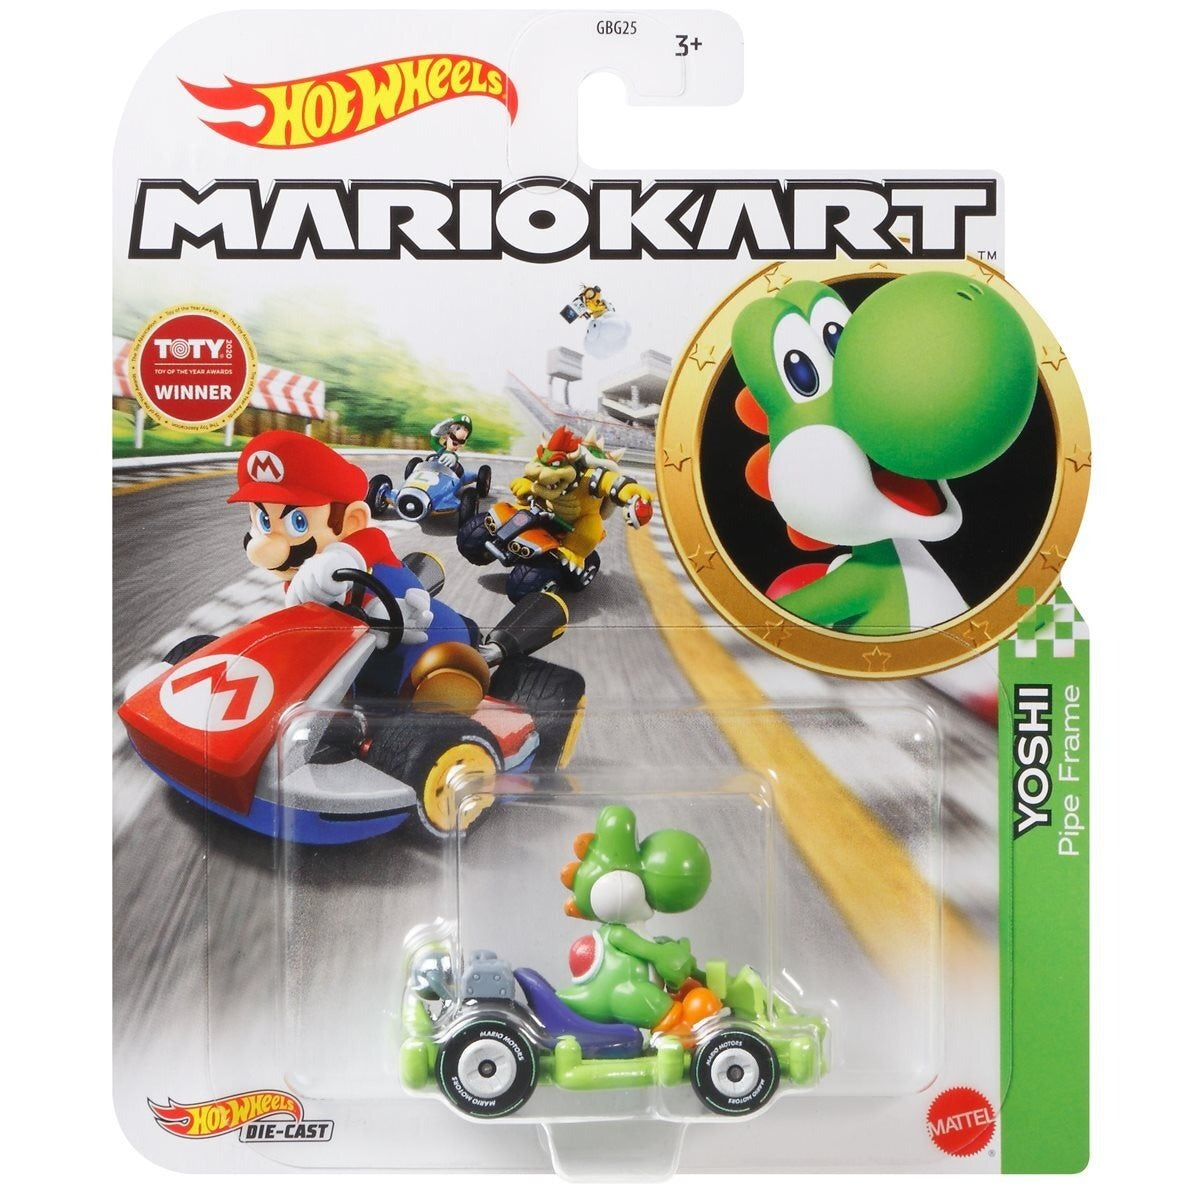 Mattel-Hot Wheels Mario Kart-GRN19-Yoshi-Legacy Toys